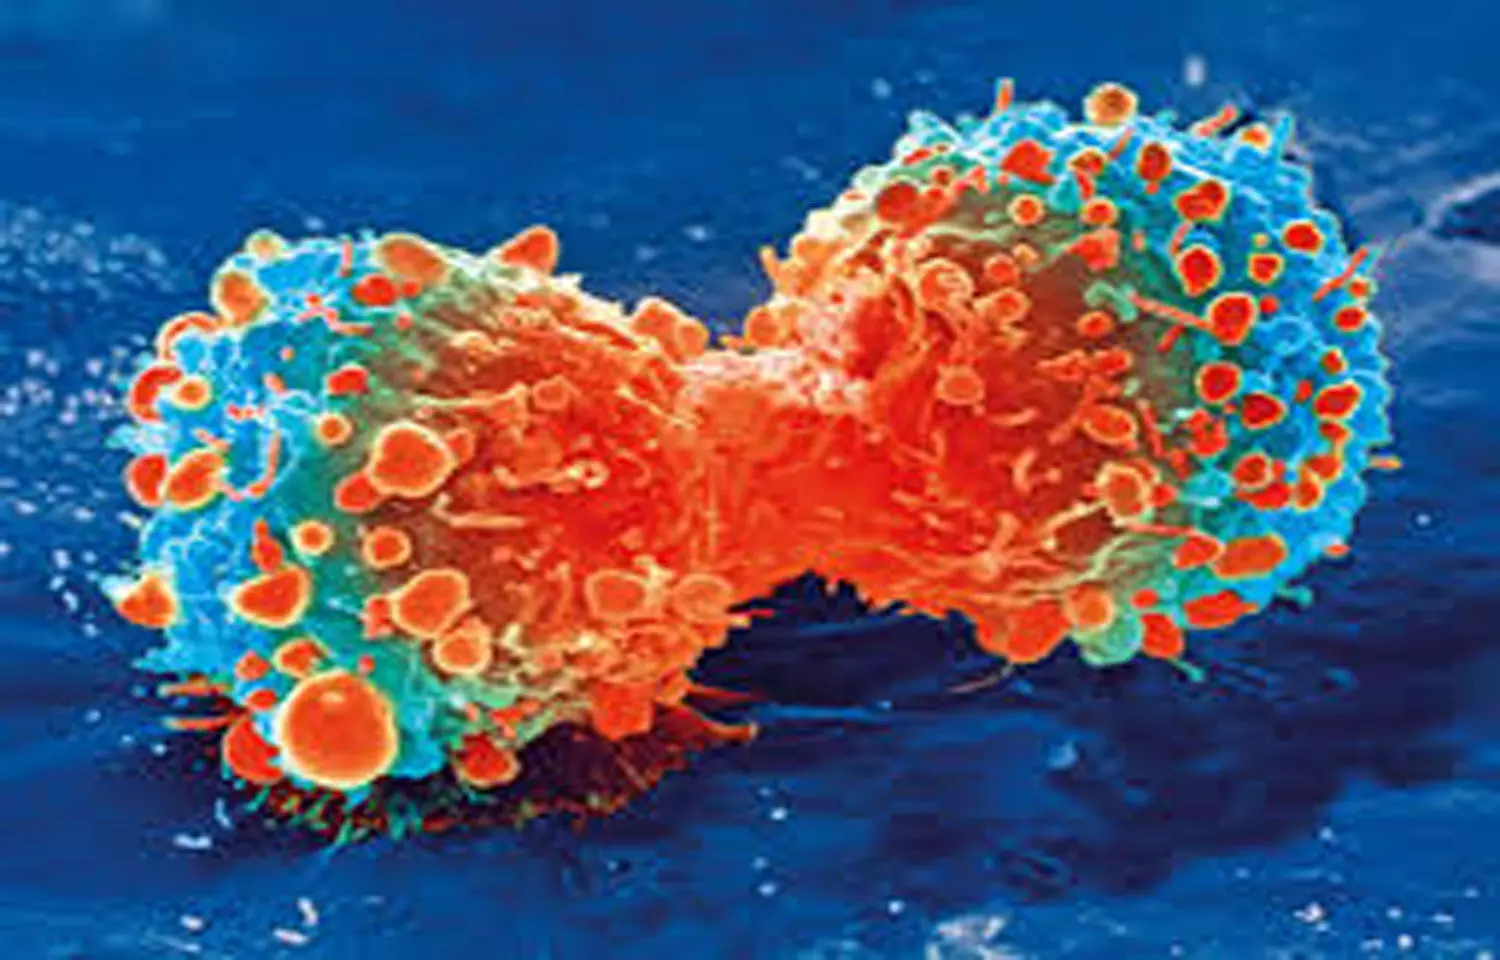 Targeted drug shows activity against brain metastases in kidney cancer